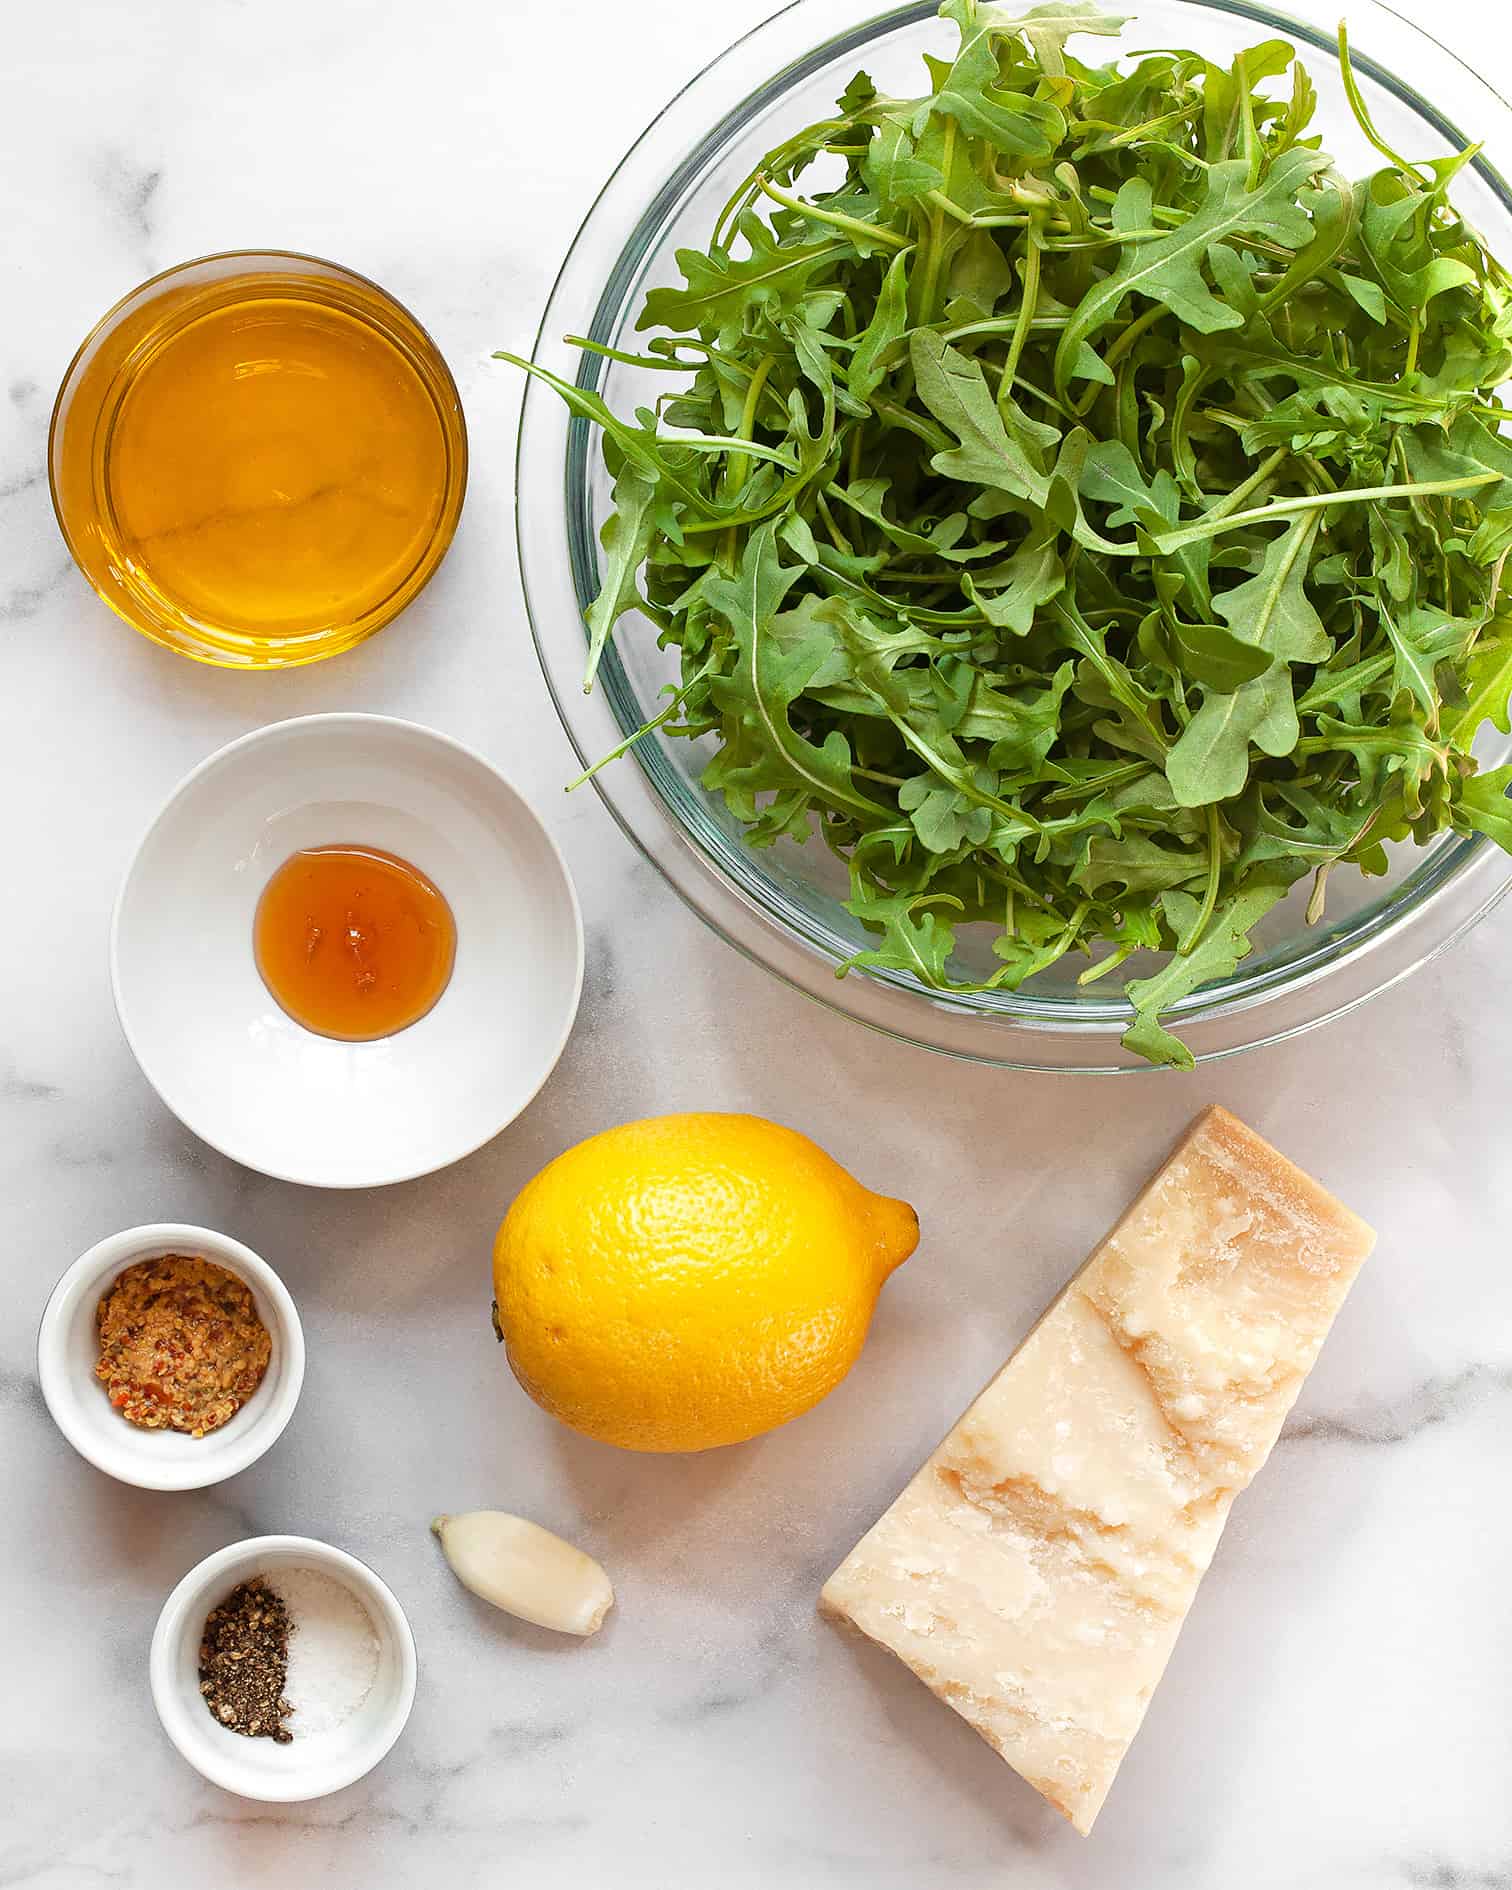 Ingredients including arugula, lemon, parmesan, olive oil, honey, garlic and mustard